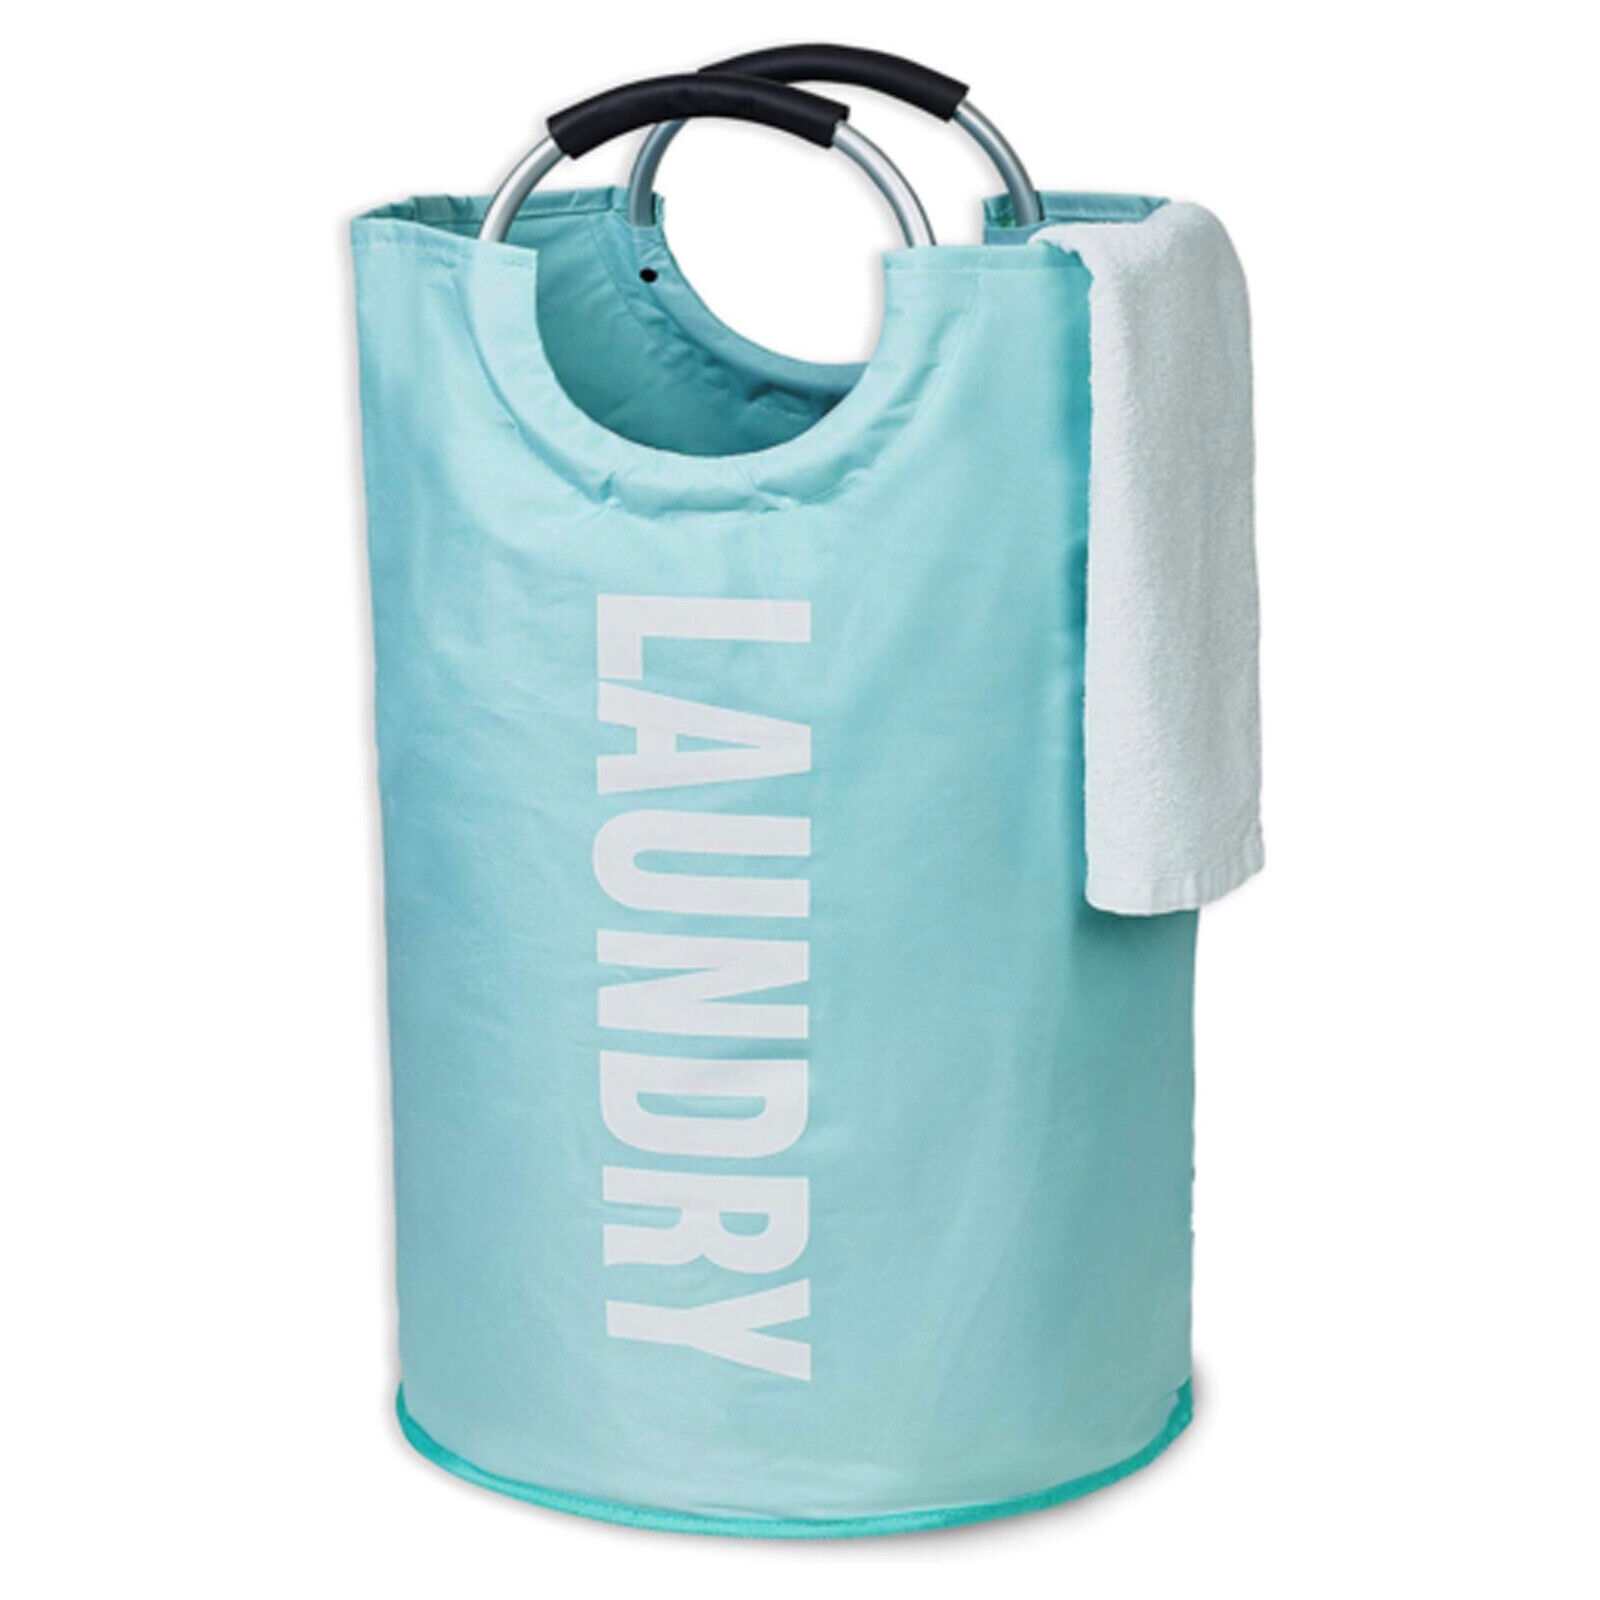 Light Blue Foldable Laundry Basket Clothes Bag Collapsible Laundry Hamper Washing Bin